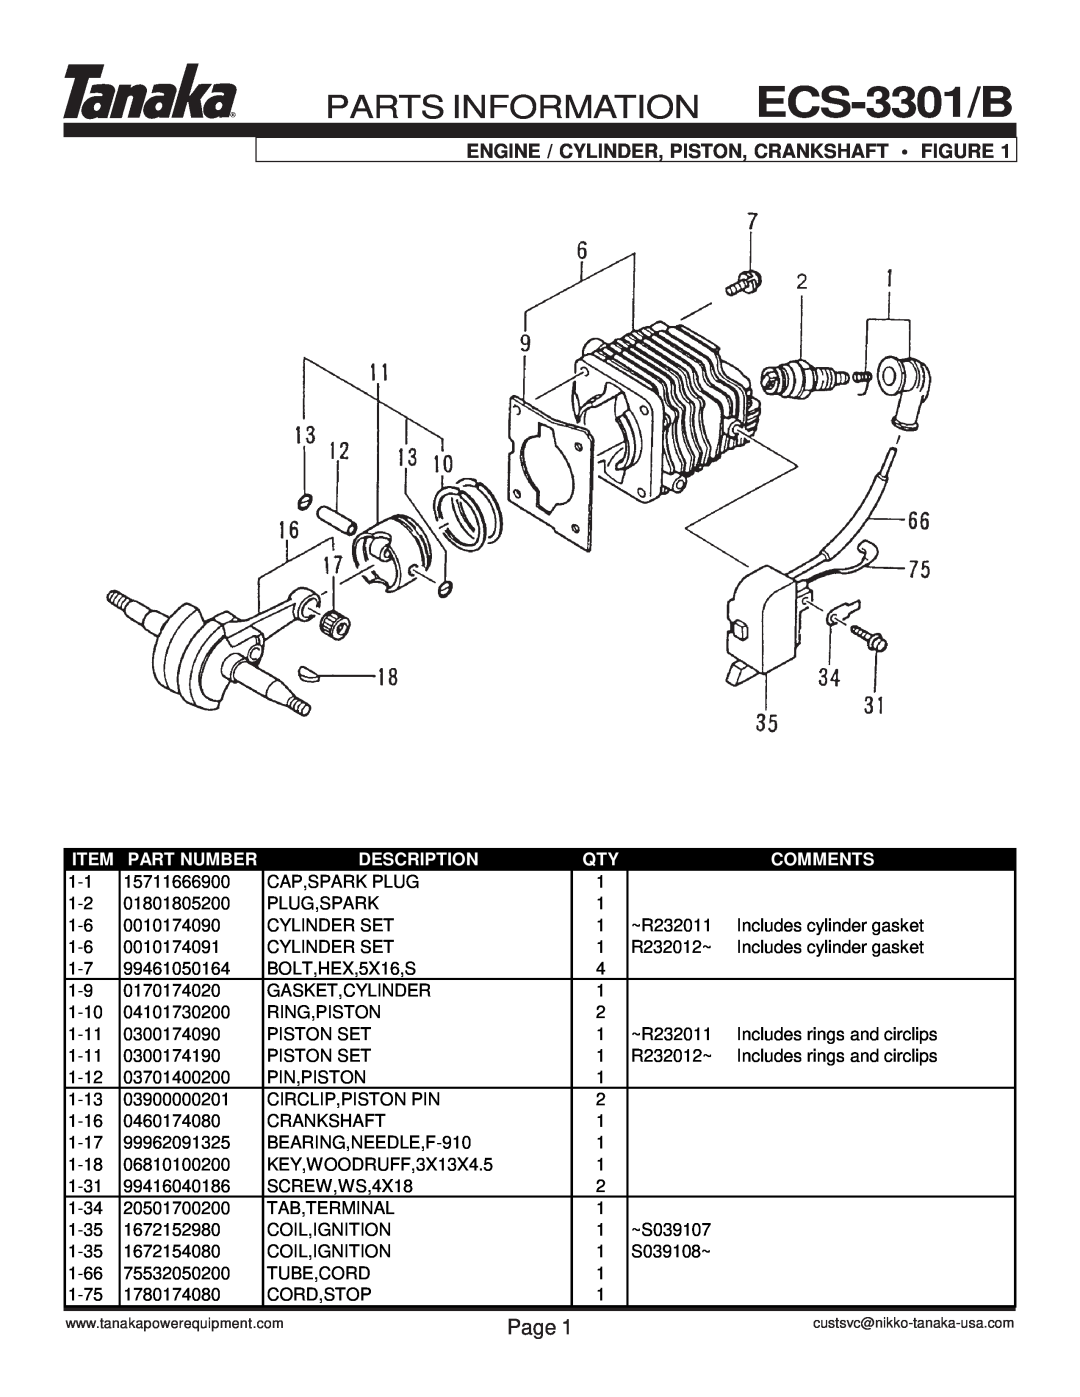 Tanaka manual PARTS INFORMATION ECS-3301/B, Engine / Cylinder, Piston, Crankshaft Figure, Page, Part Number, Description 